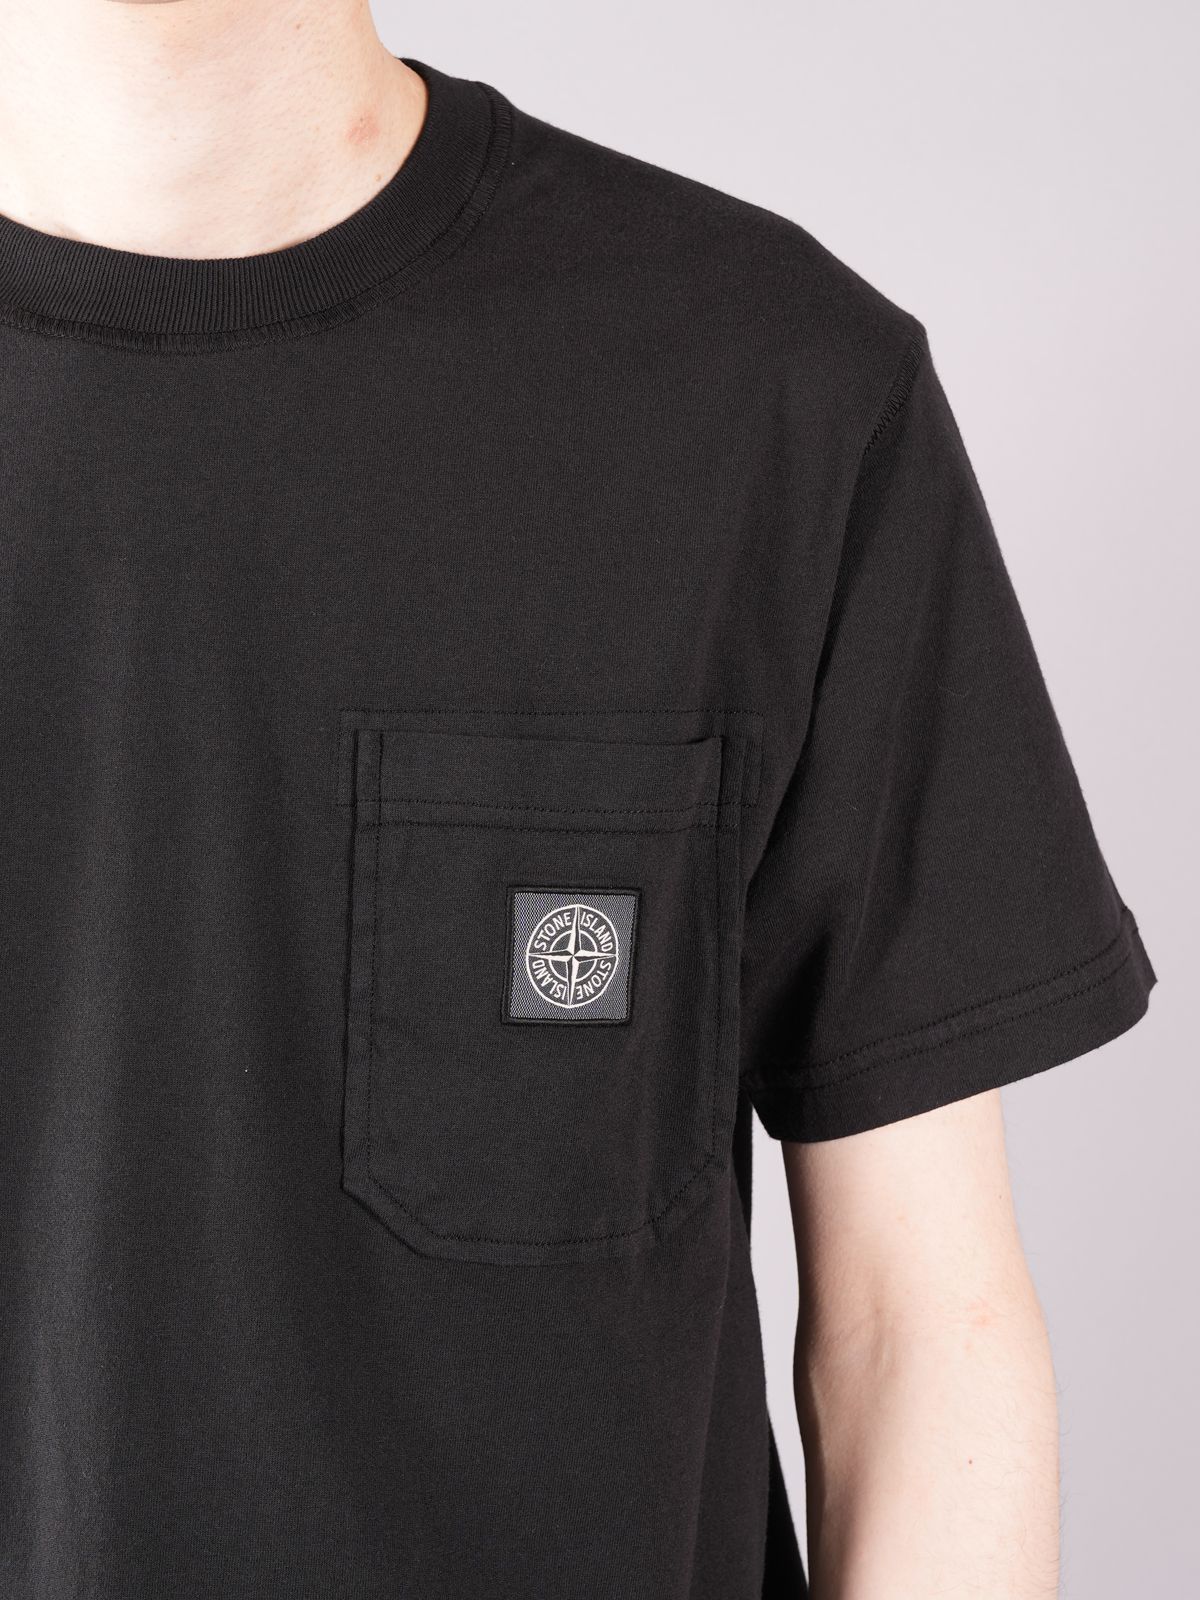 STONE ISLAND - 【ラスト1点】FISSATO' TREATMENT / ポケット Tシャツ ...